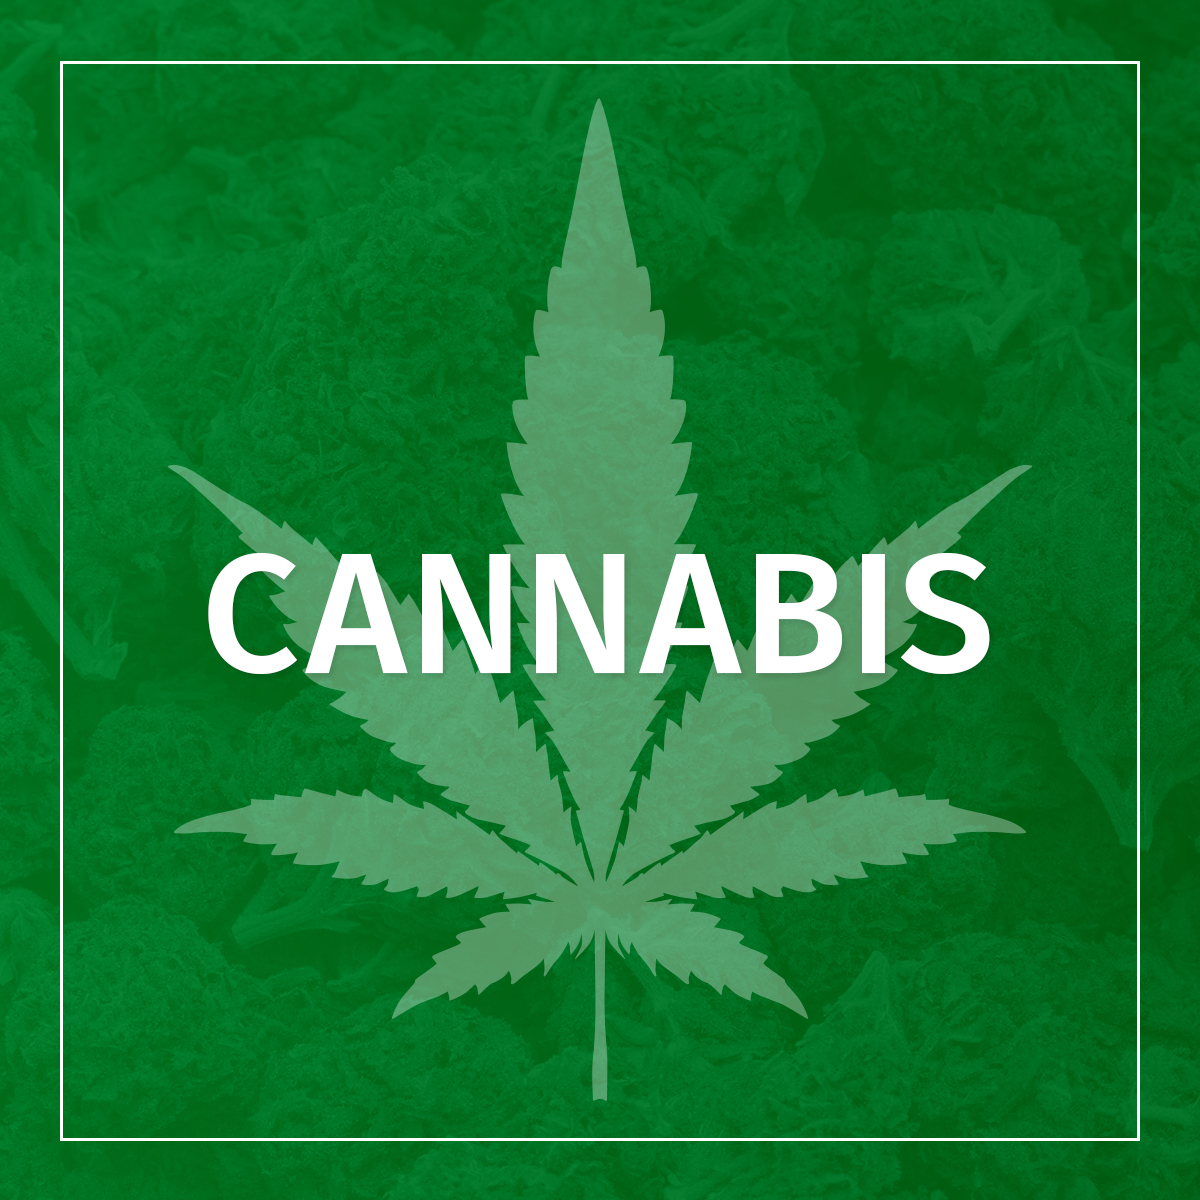 Cannabis graphic